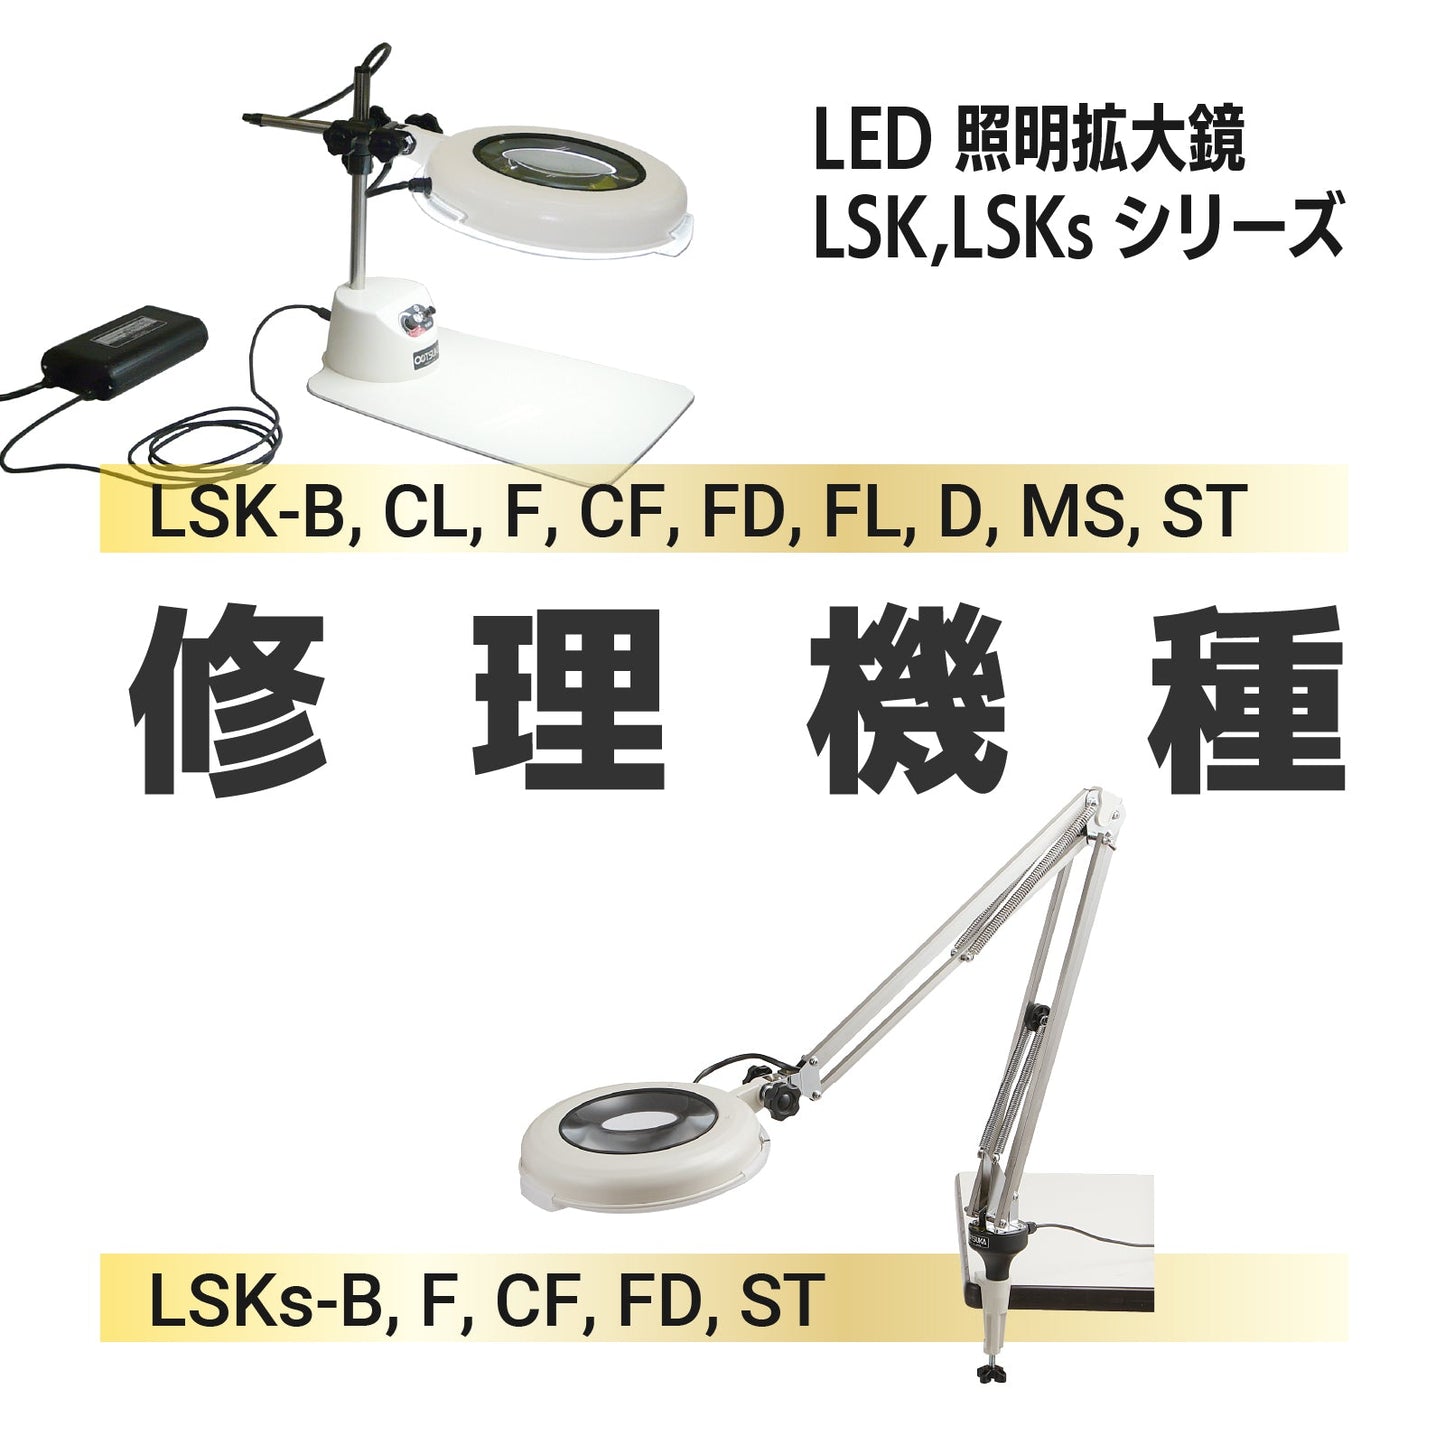 Serie LSK/LSKs: Común a todos los modelos